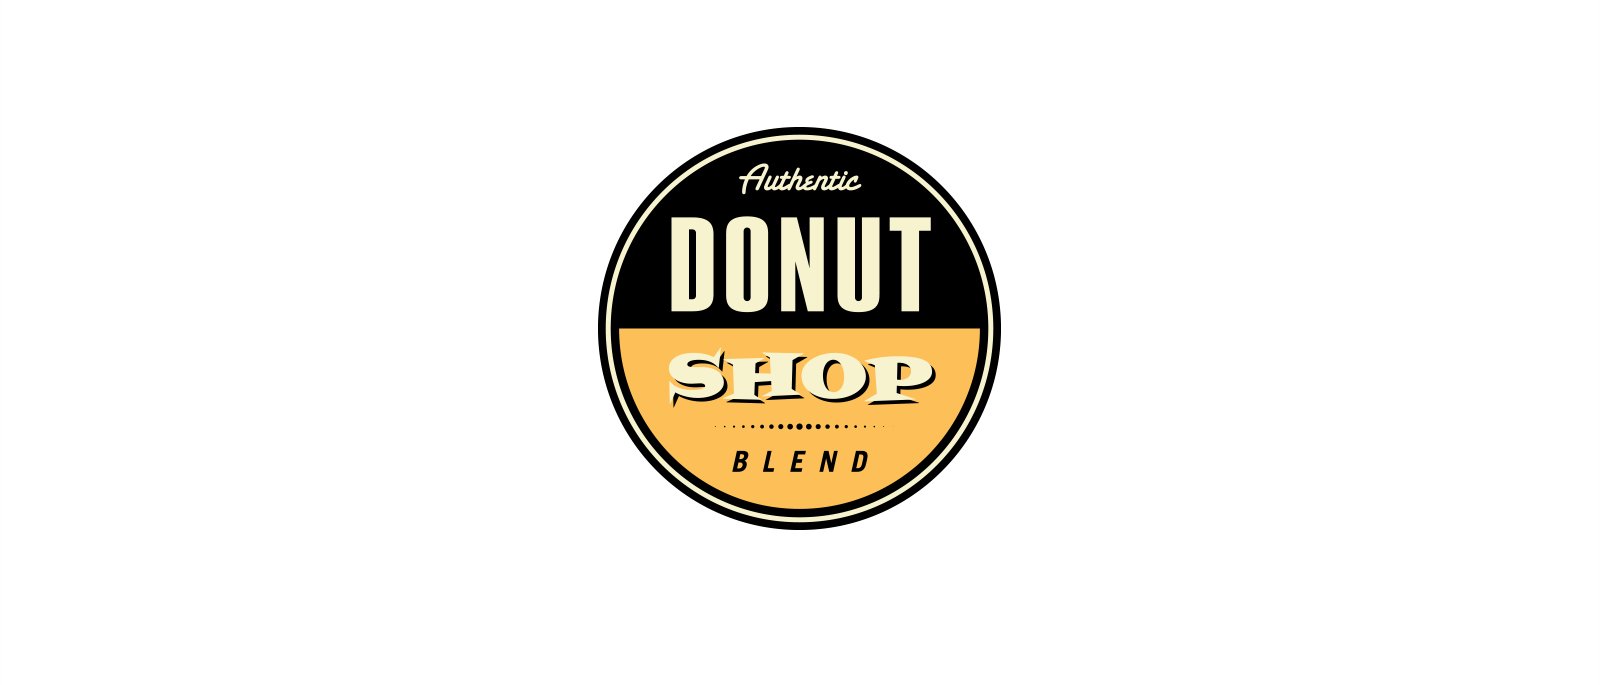 Authentic Donut Shop Blend - Identity